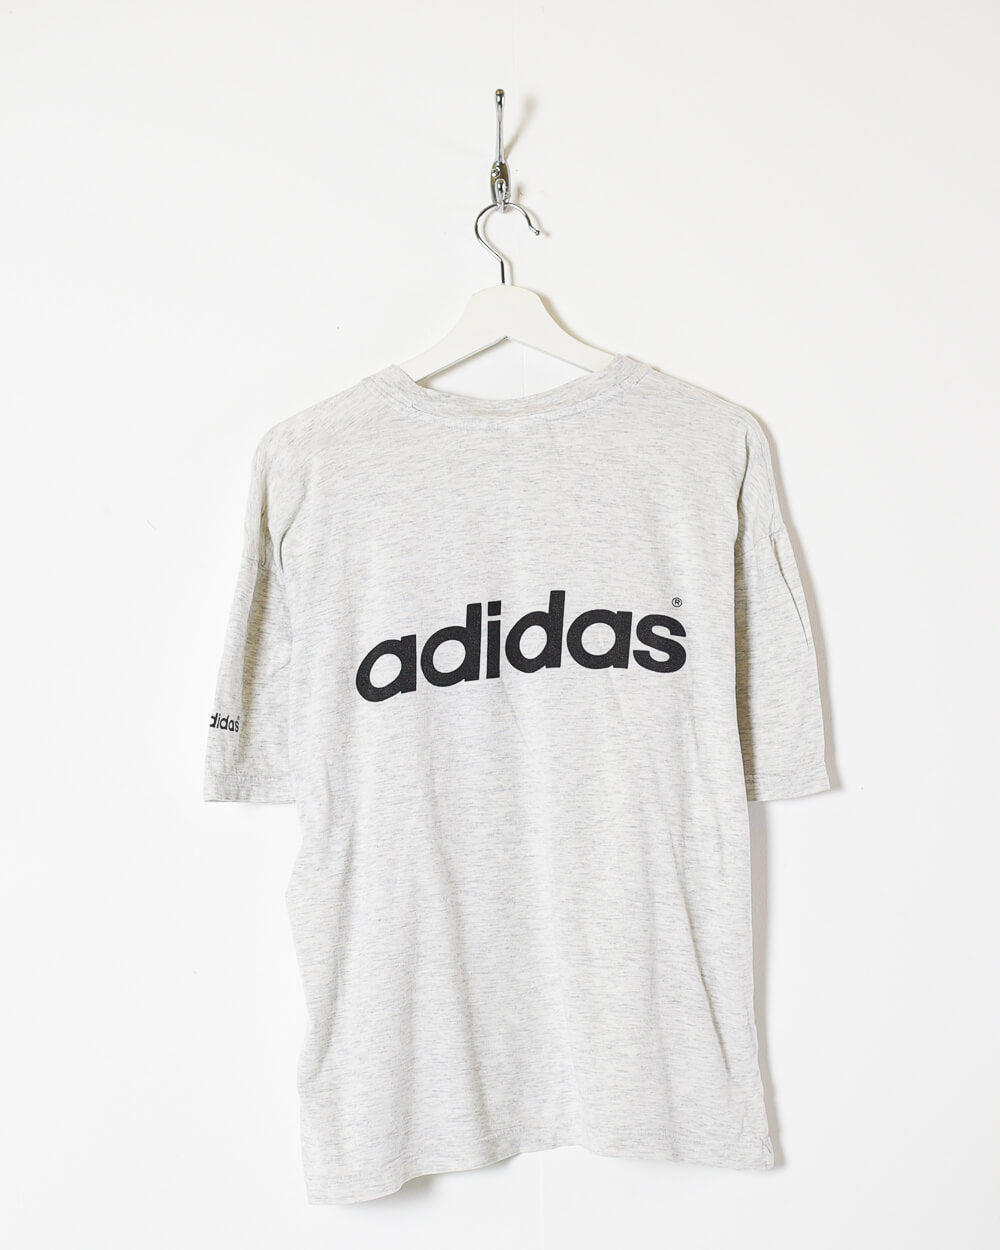 Stone Adidas Grief T-Shirt - Medium